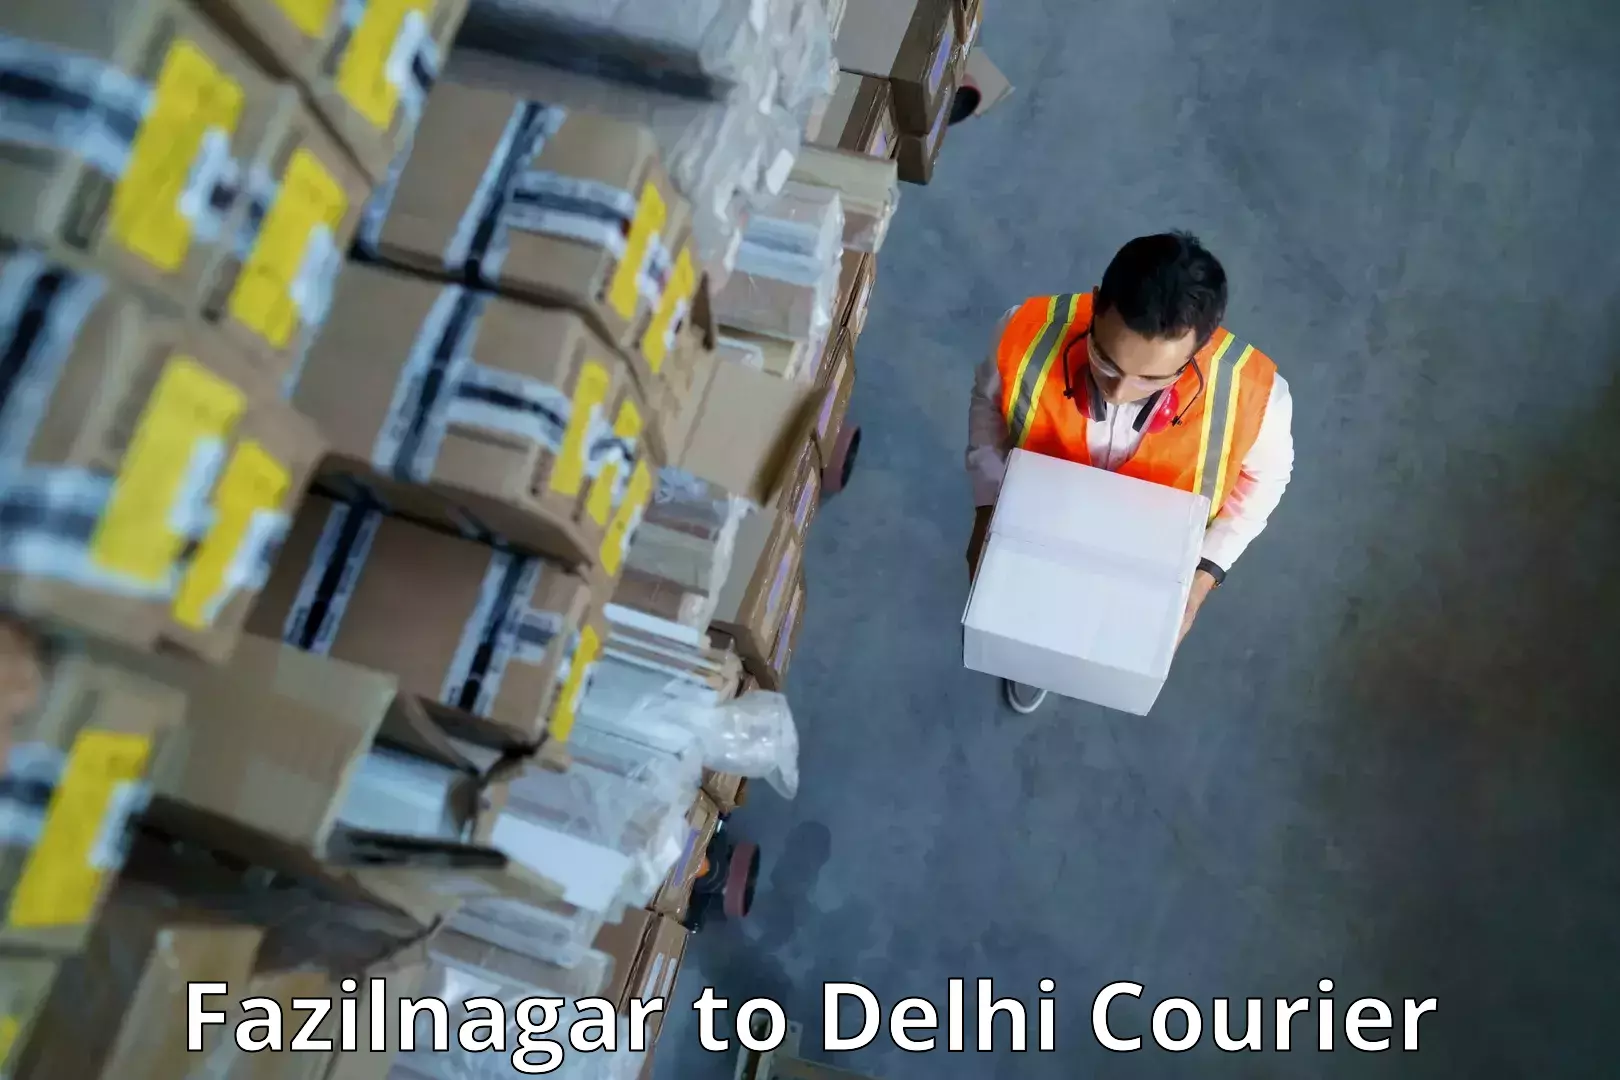 On-call courier service Fazilnagar to East Delhi